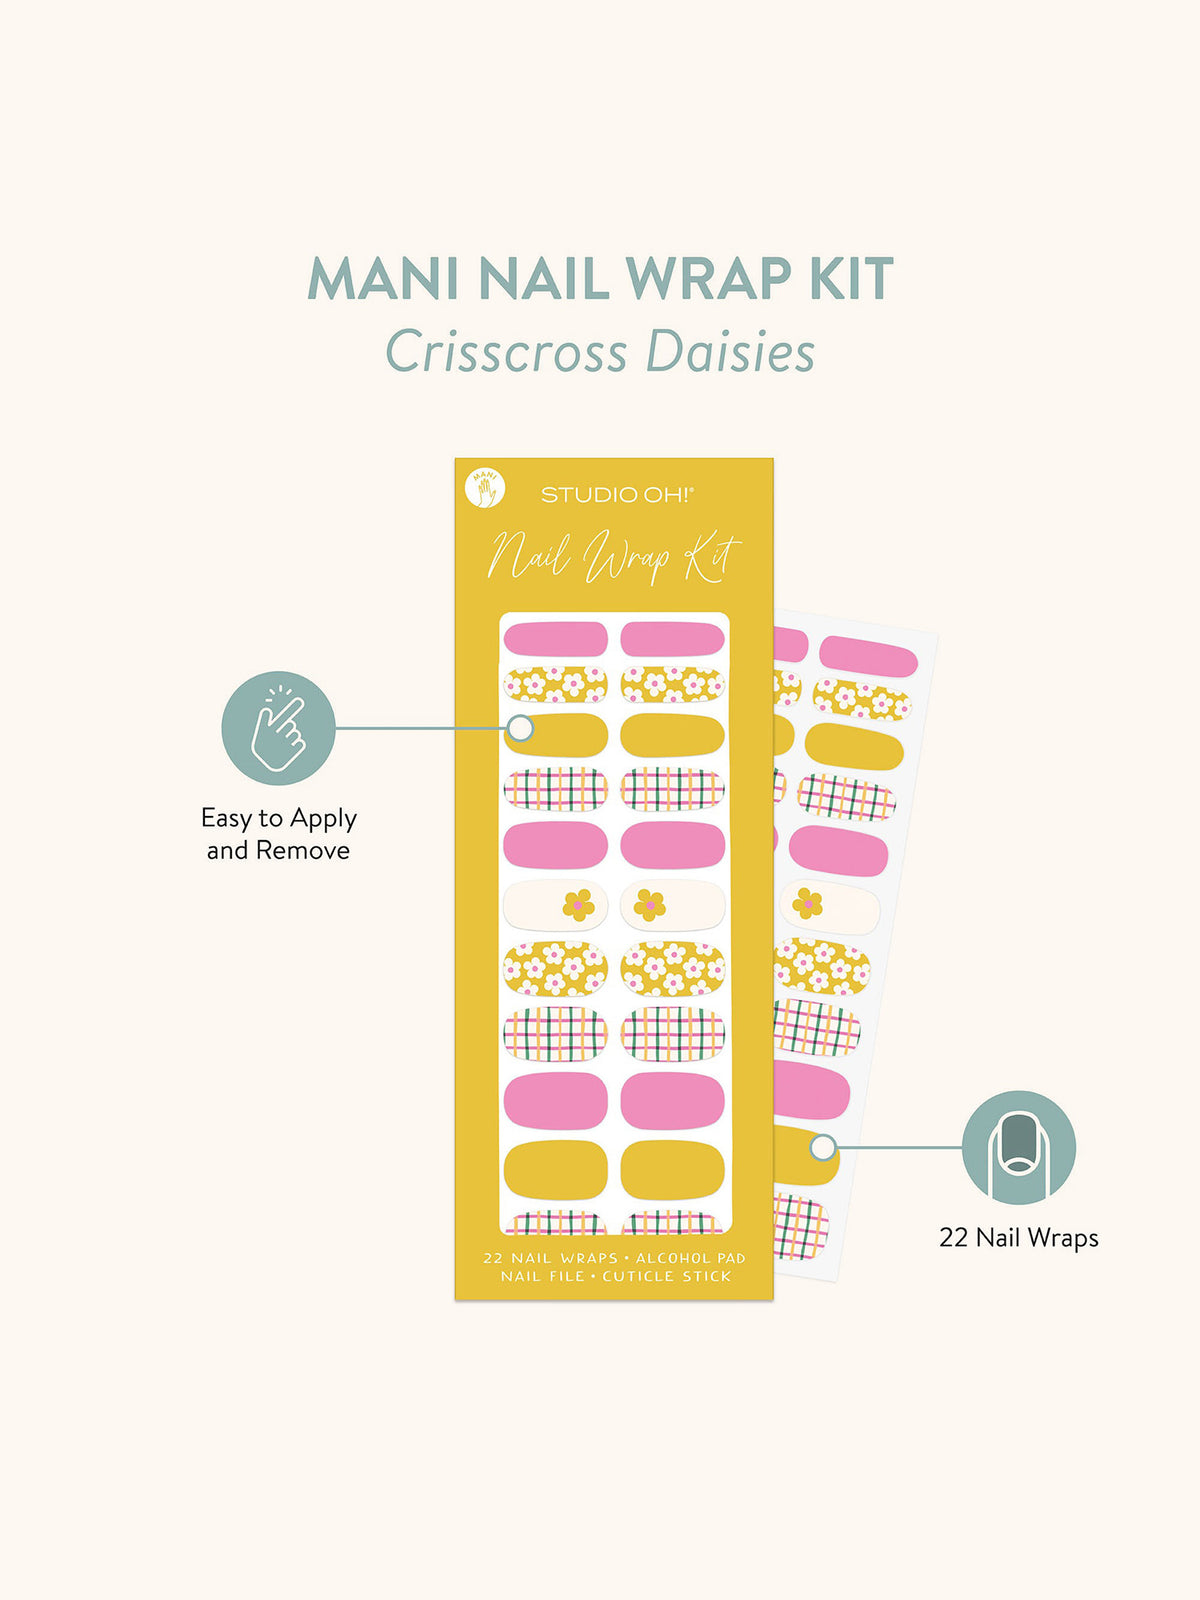 Crisscross Daisies Mani Nail Wrap Kit